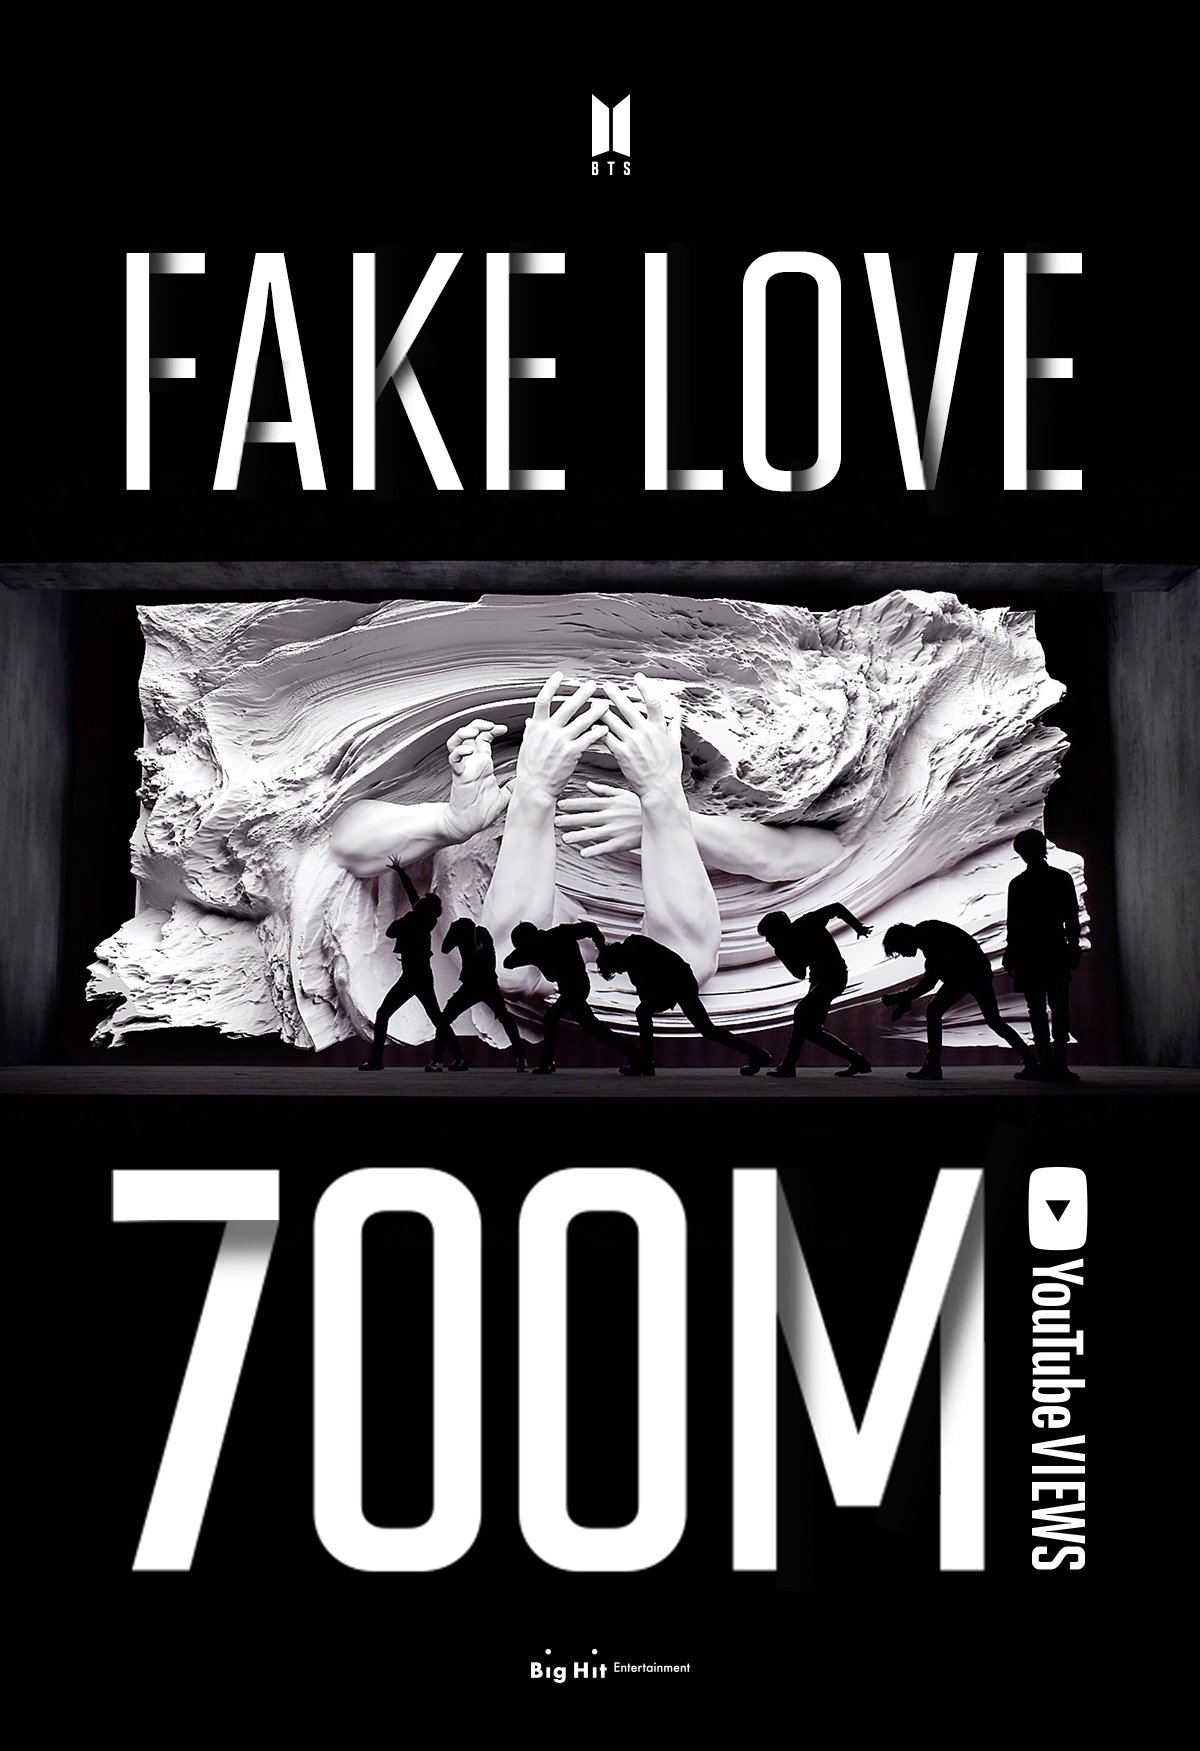 BTS Broke 700 million views on 'FAKE LOVE' MV 'Great Record'